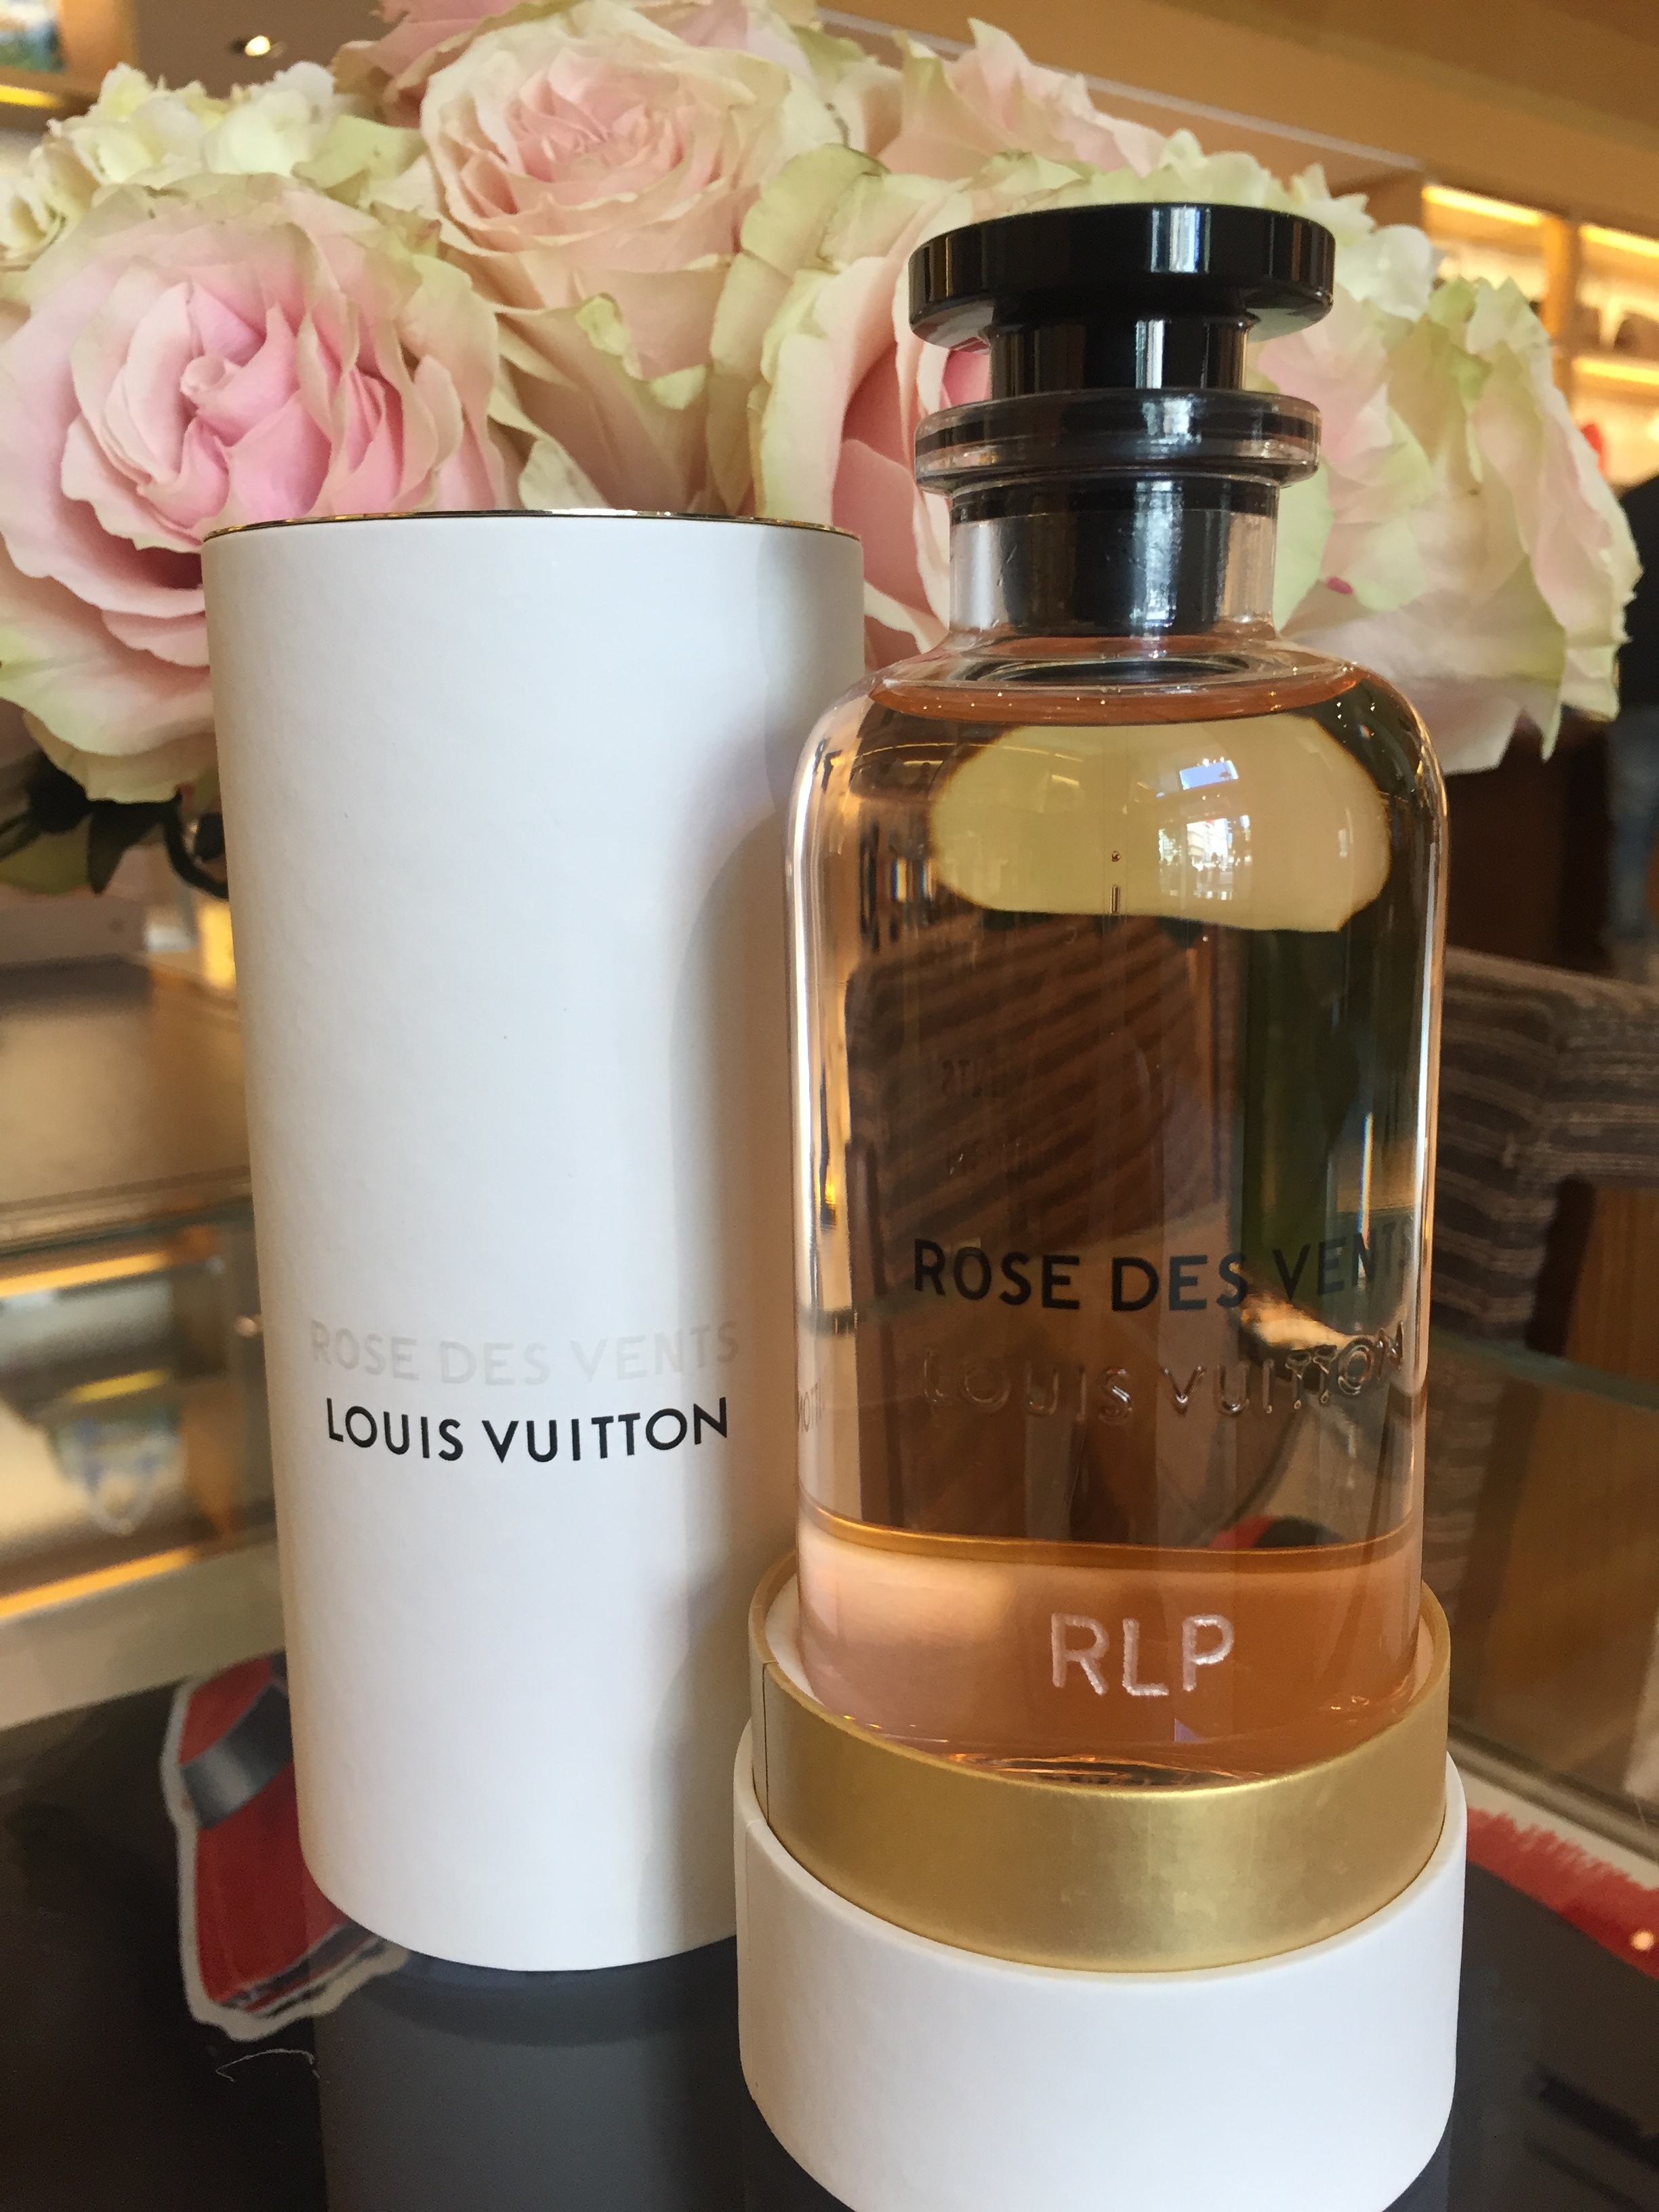 Make sure to engrave USE on your Louis Vuitton fragrances : r/eaudejerks